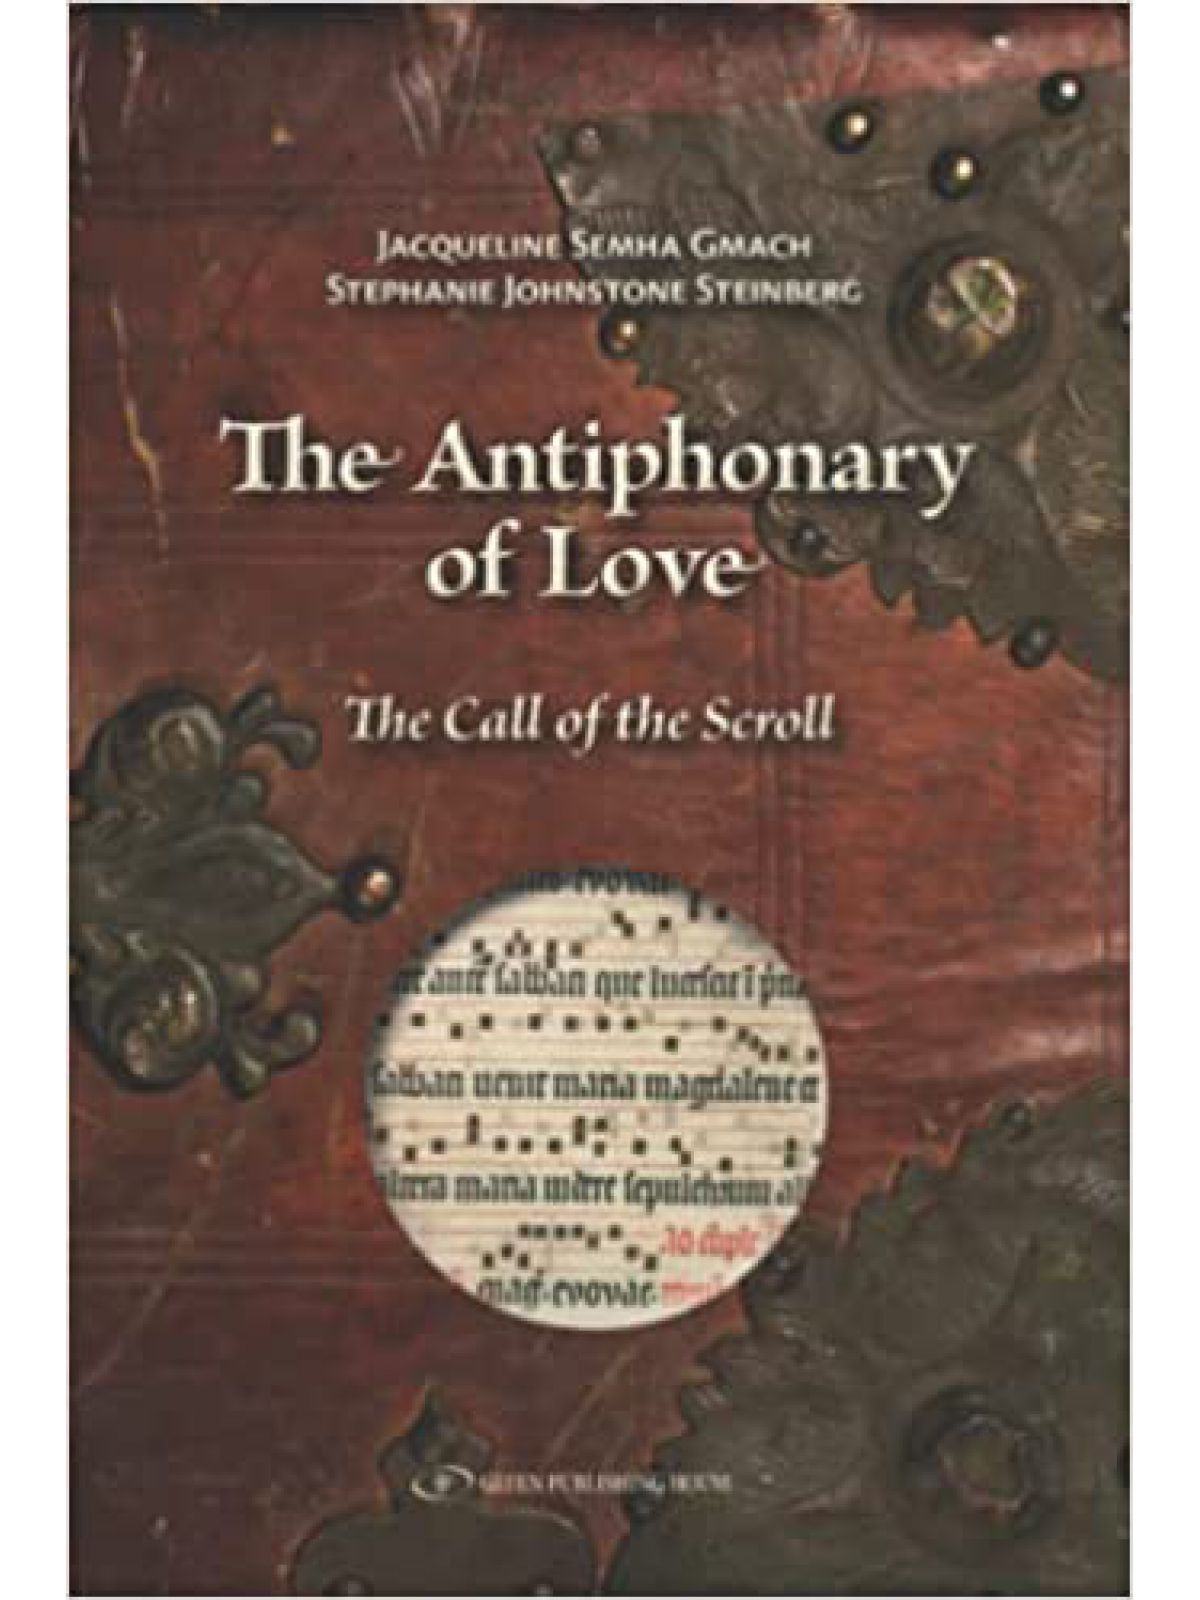 ANTIPHONARY OF LOVE GEMACH, JACQUELINE Купить Книгу на Английском